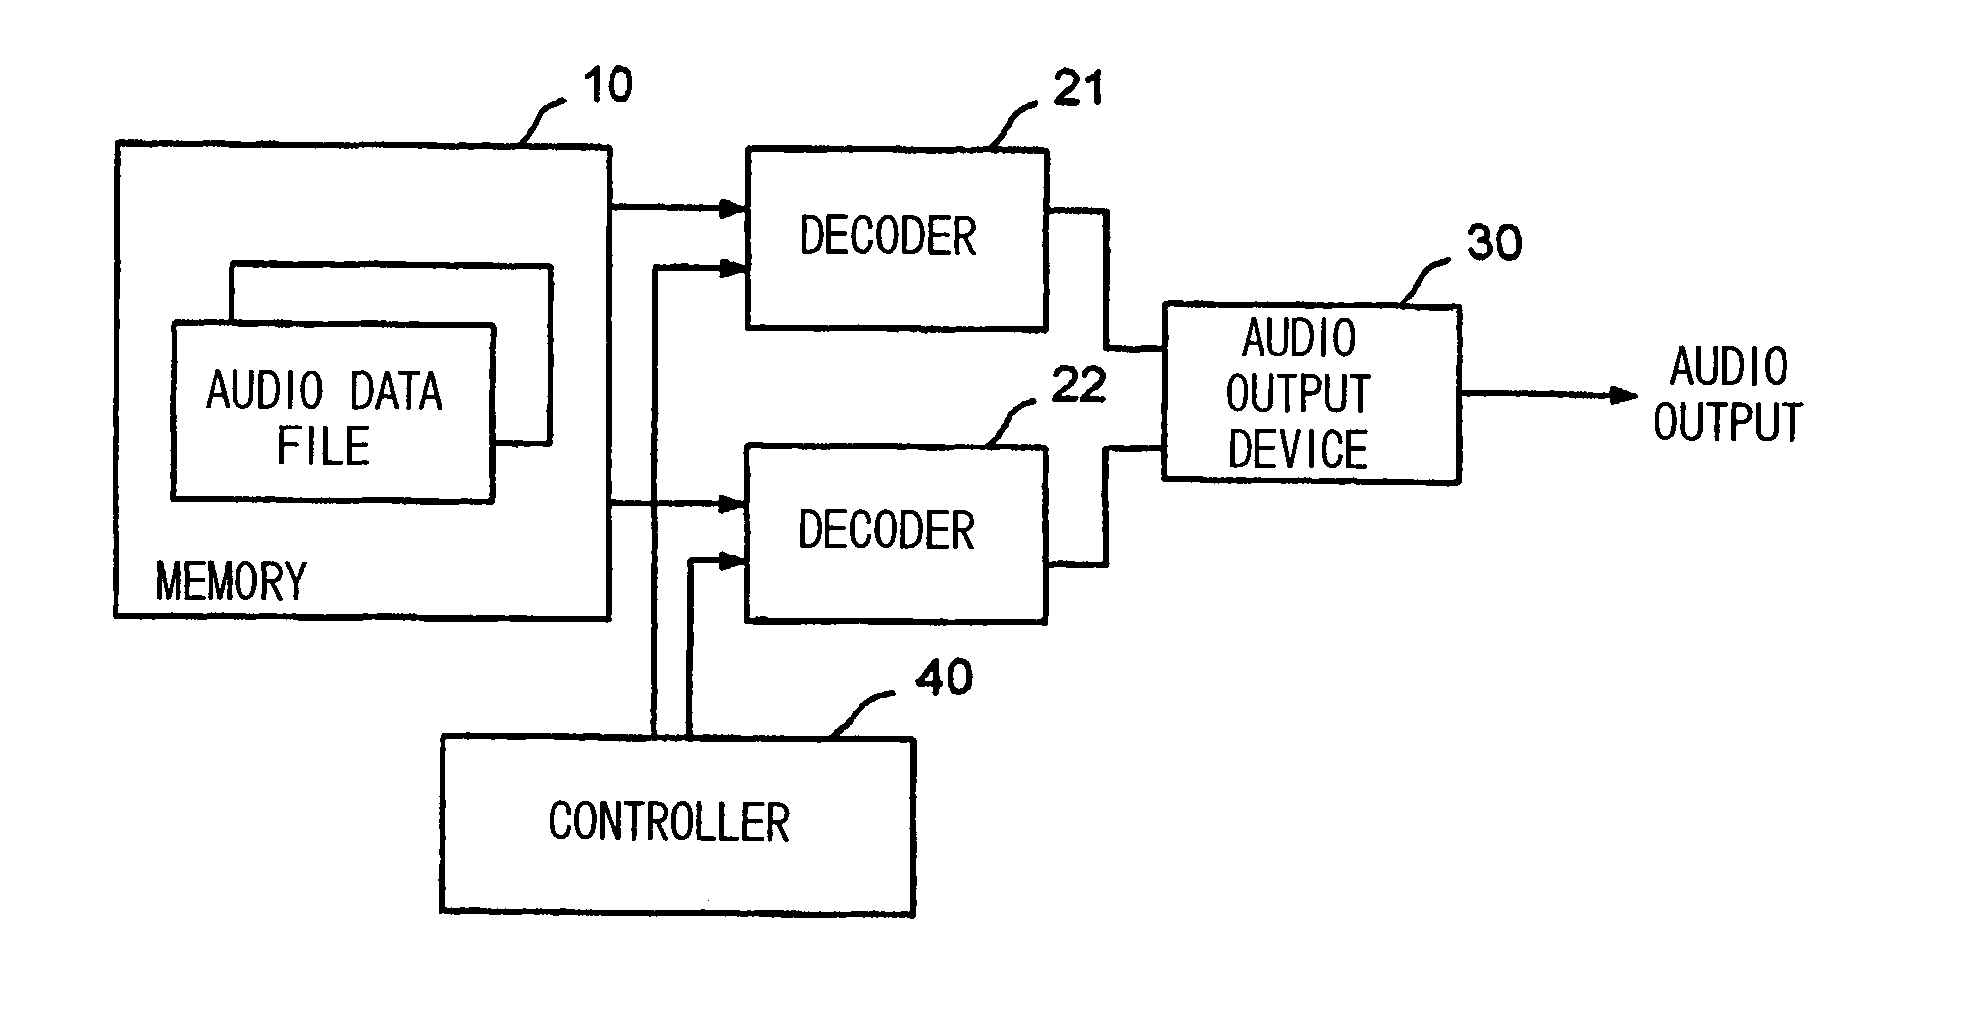 Audio playback apparatus